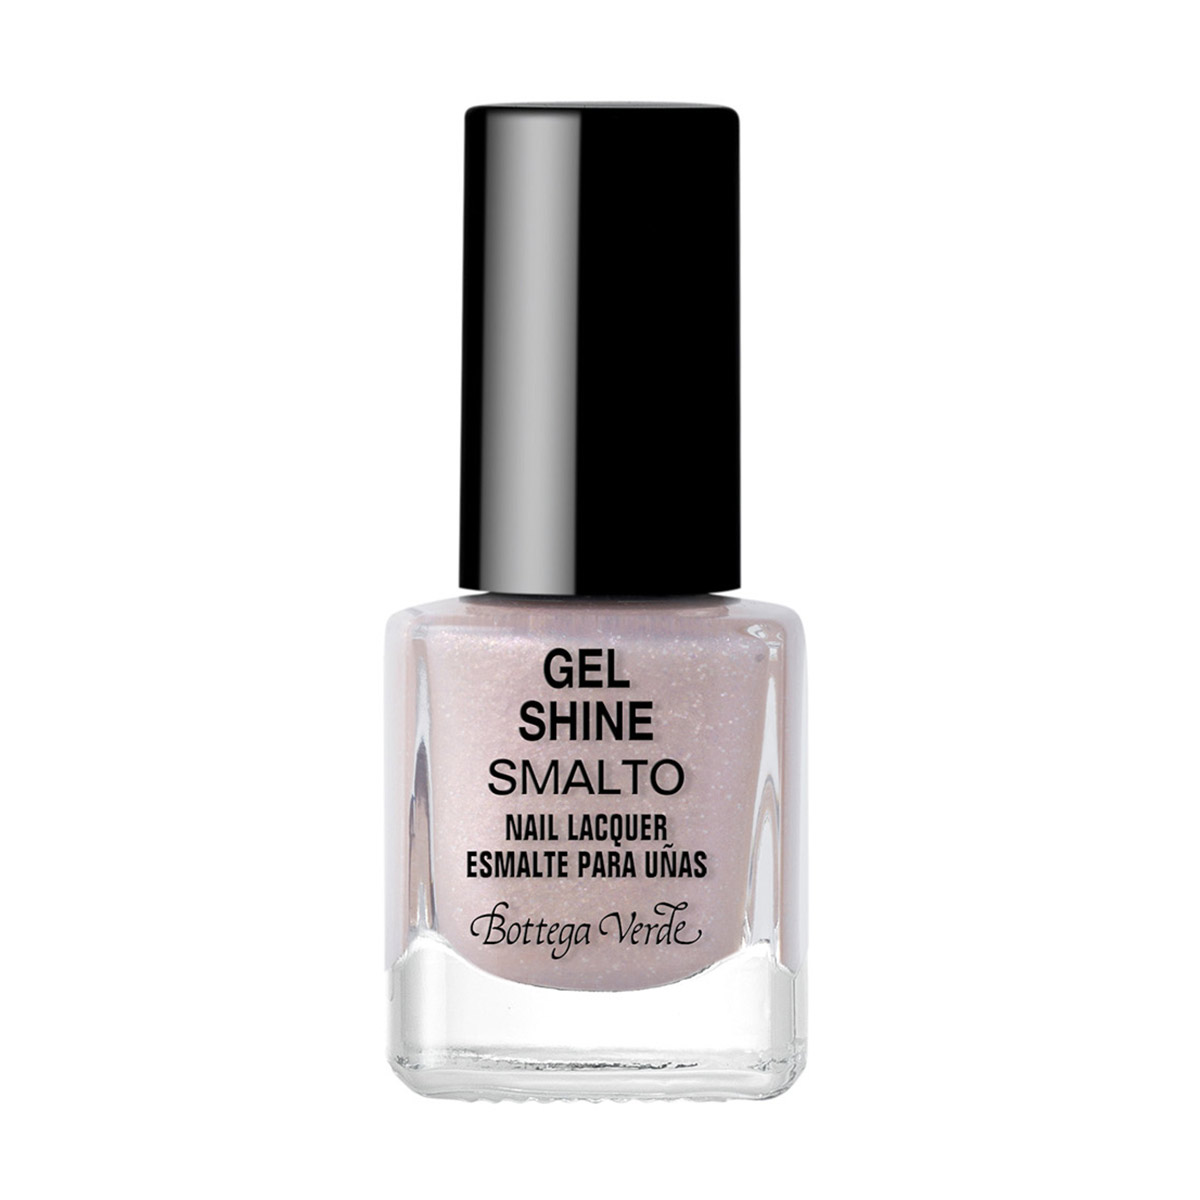 Gel Shine - Nail Lacquer (5 ml)